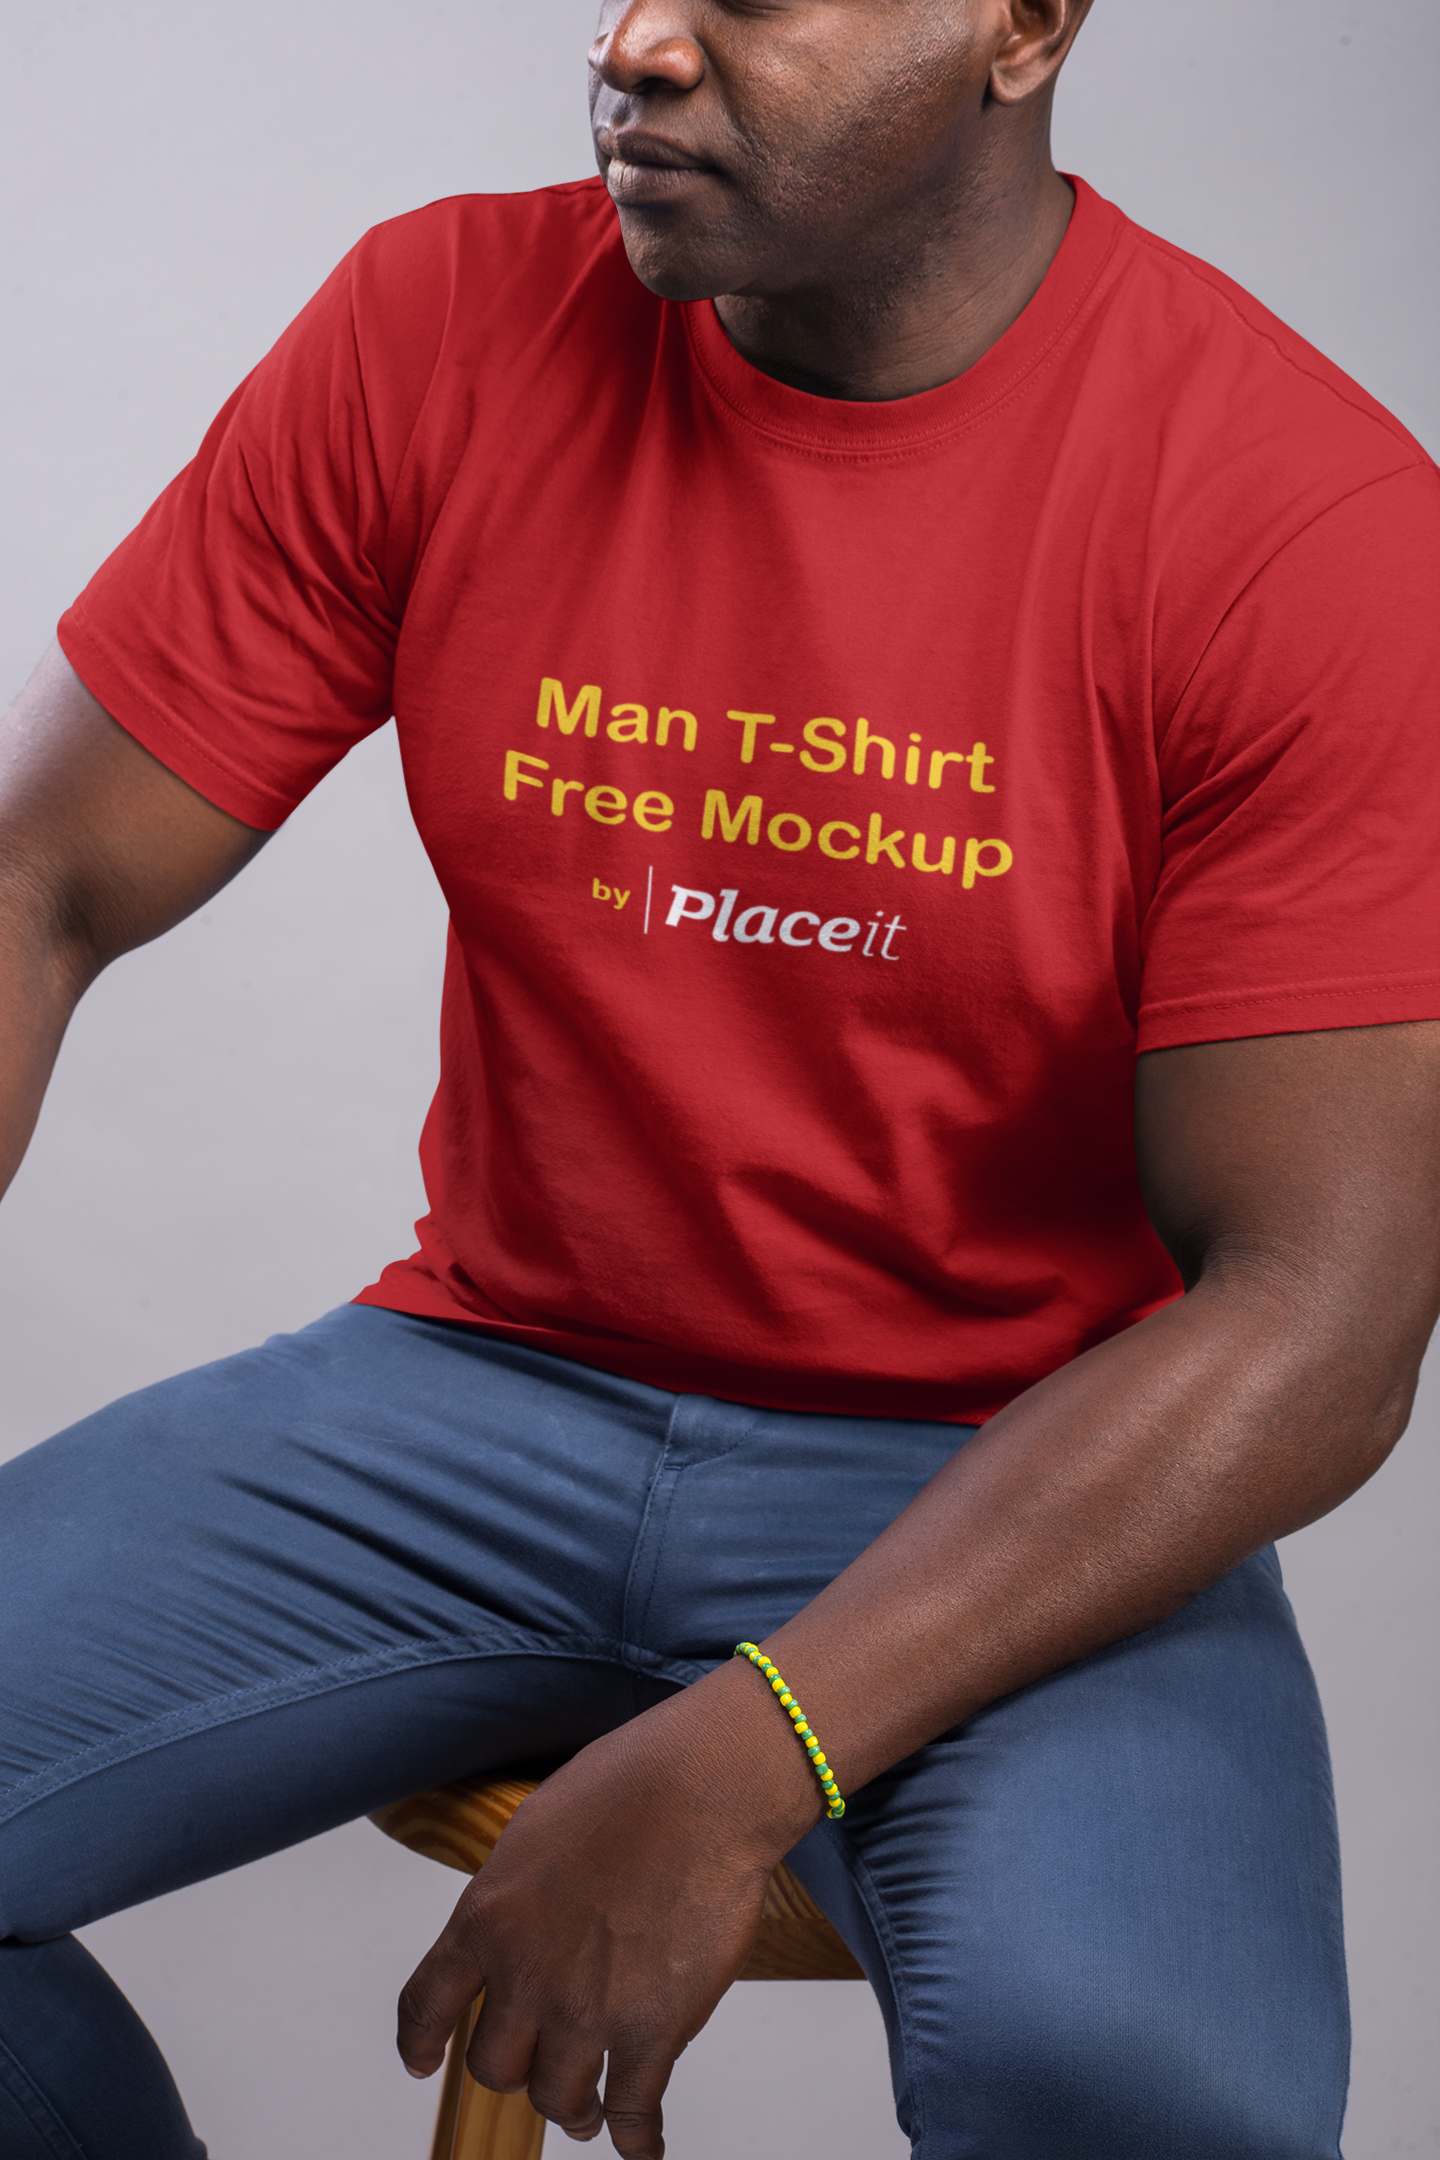 man-t-shirt-free-mockup